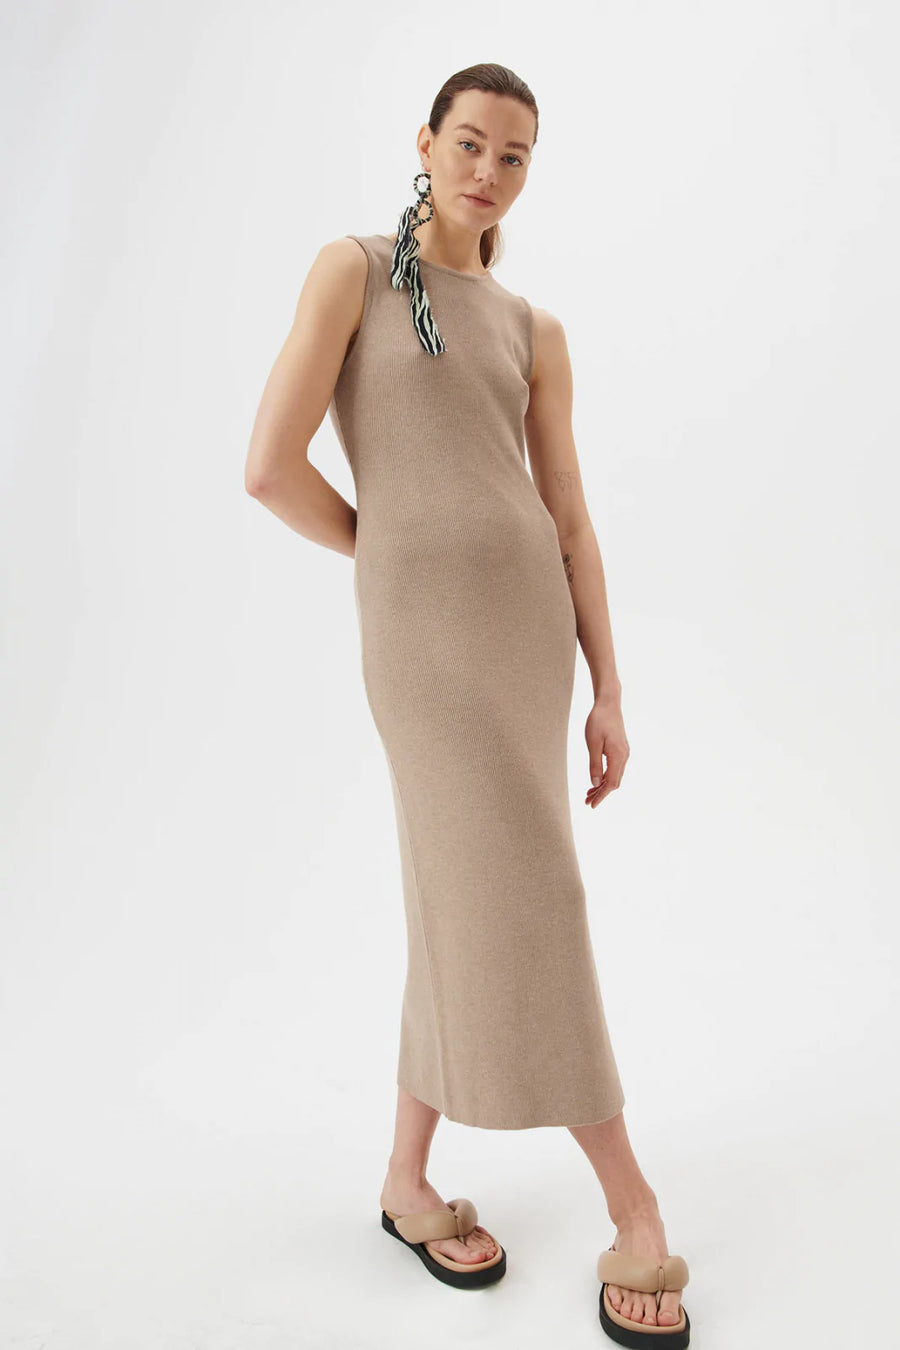 Les Goodies - Elementy Wear Sofia Beige Dress